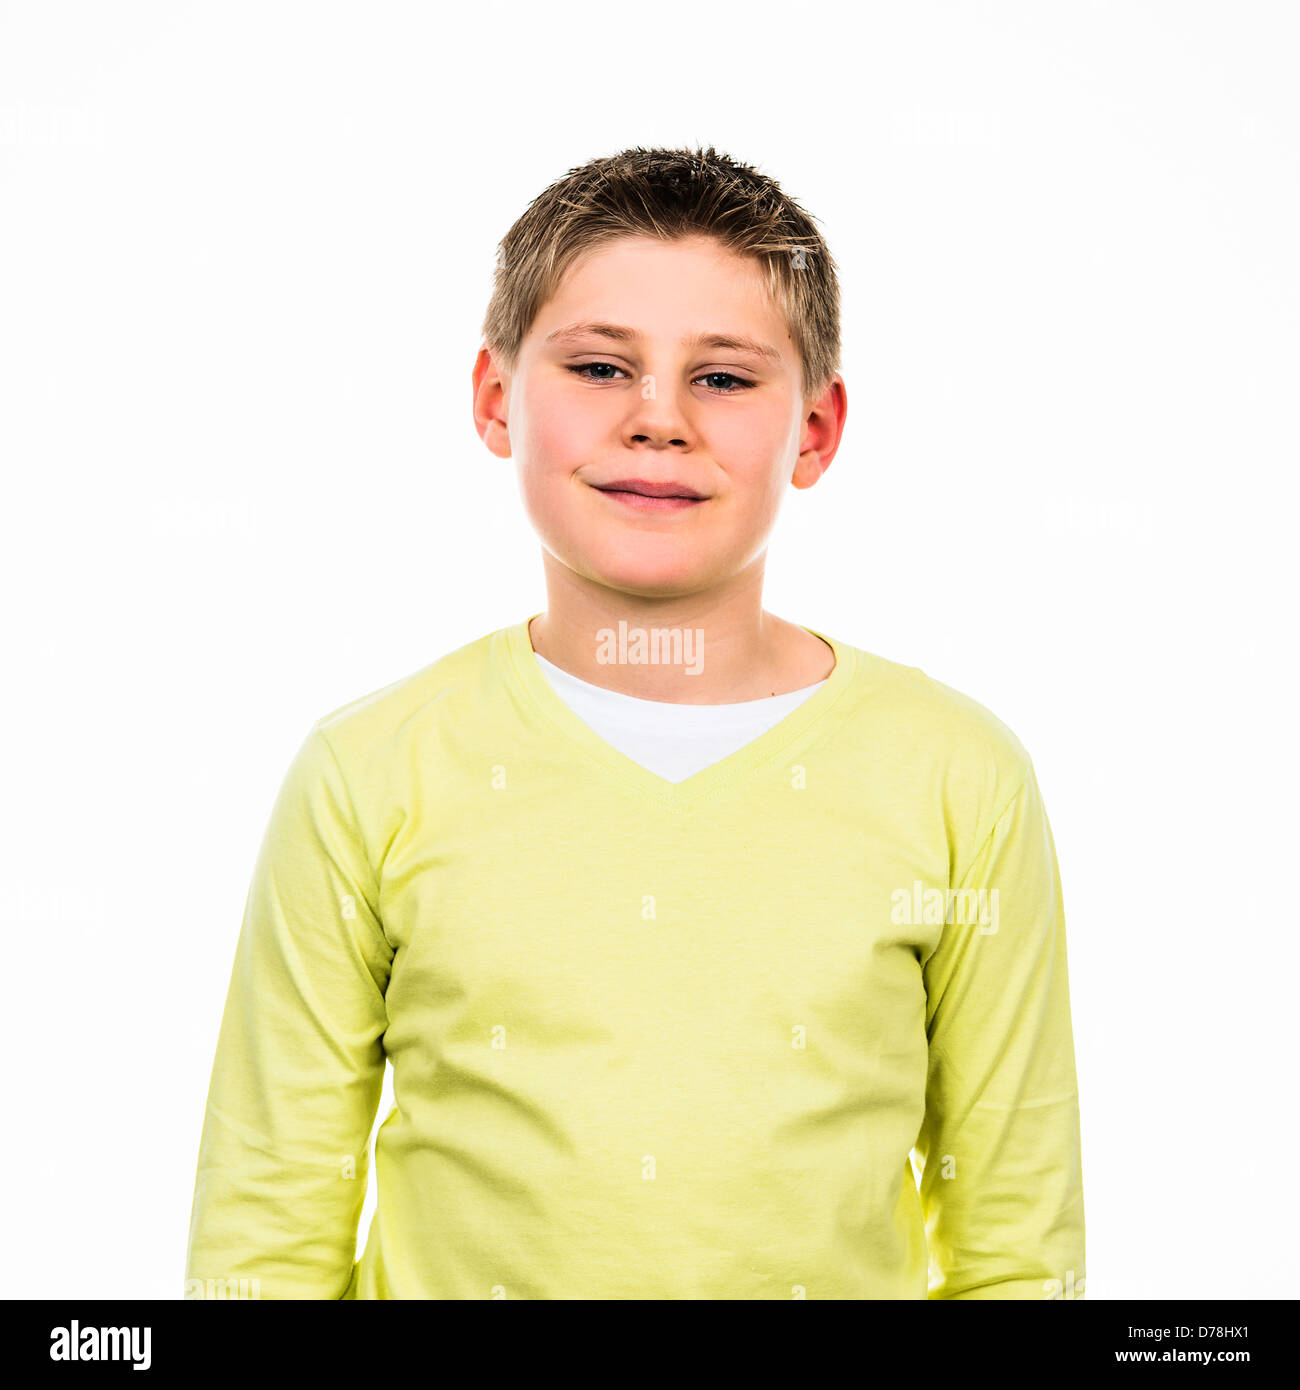 portrait of young boy with yello sweetshirt Stock Photo